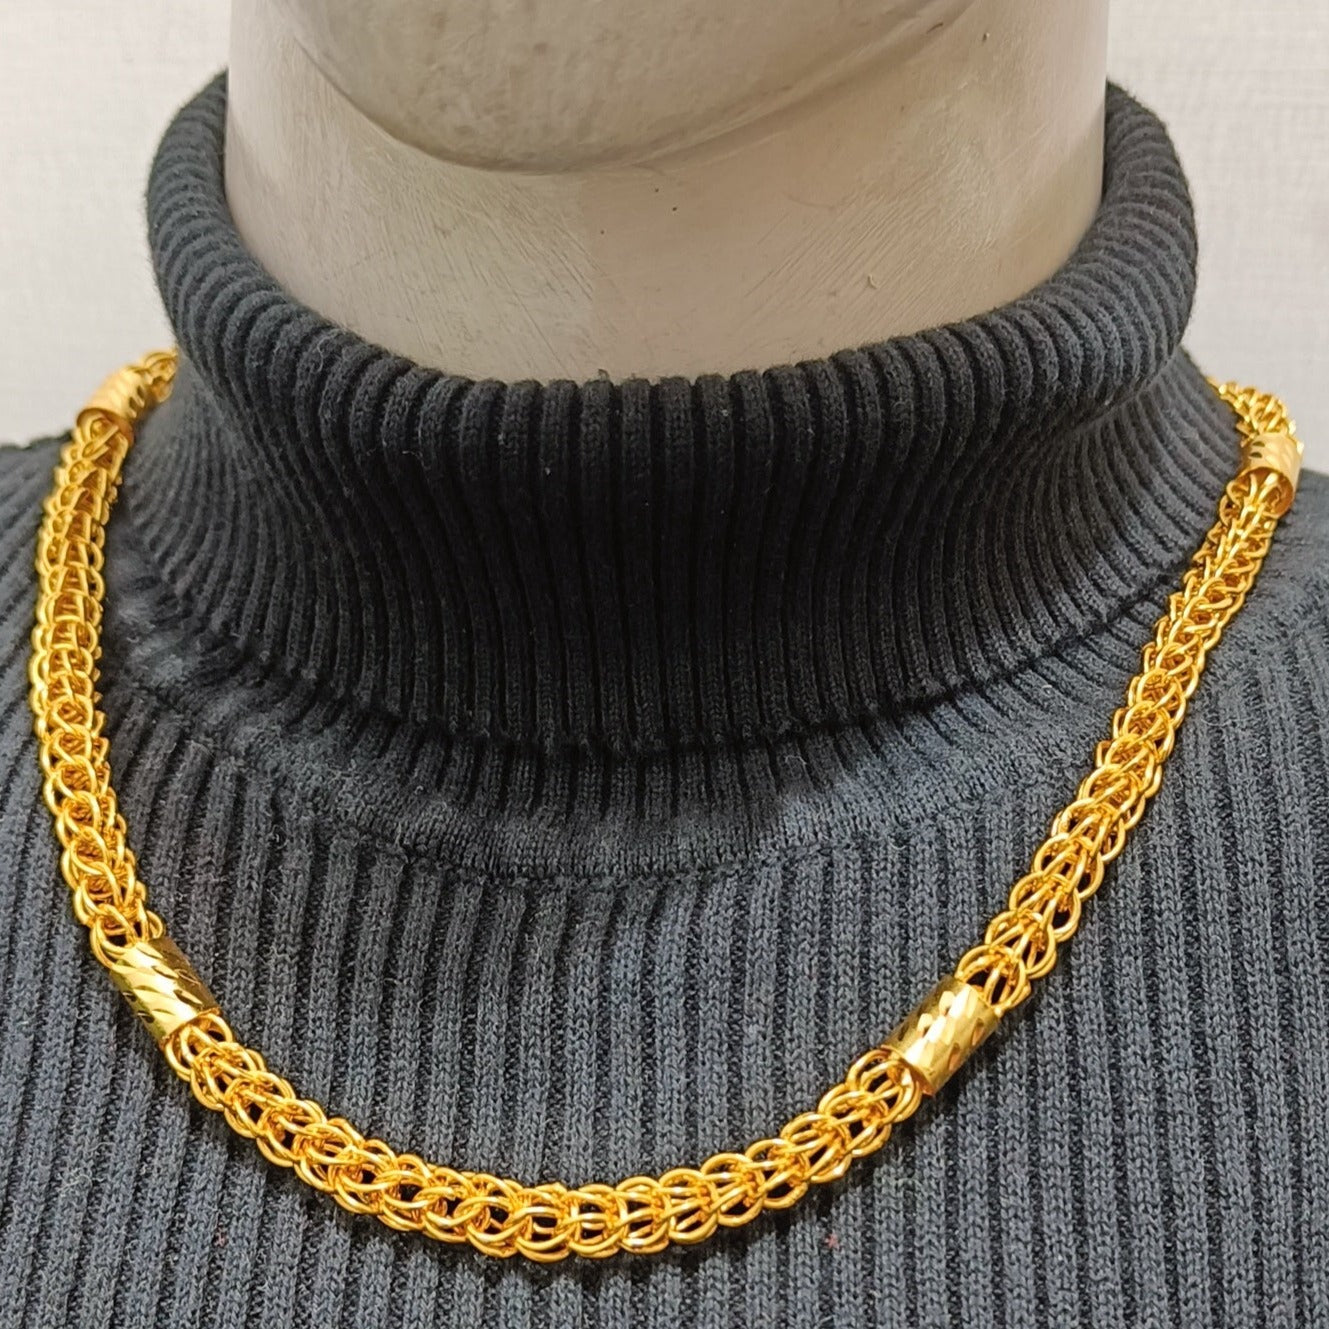 Buy CaratYogi Handmade Chain Necklace Gold Silver Plated Modern Design  Italian Stylish Chain for Women Girls Men Boys MC 3A 21 Raksha Bandhan Gift  For Sister at Amazon.in